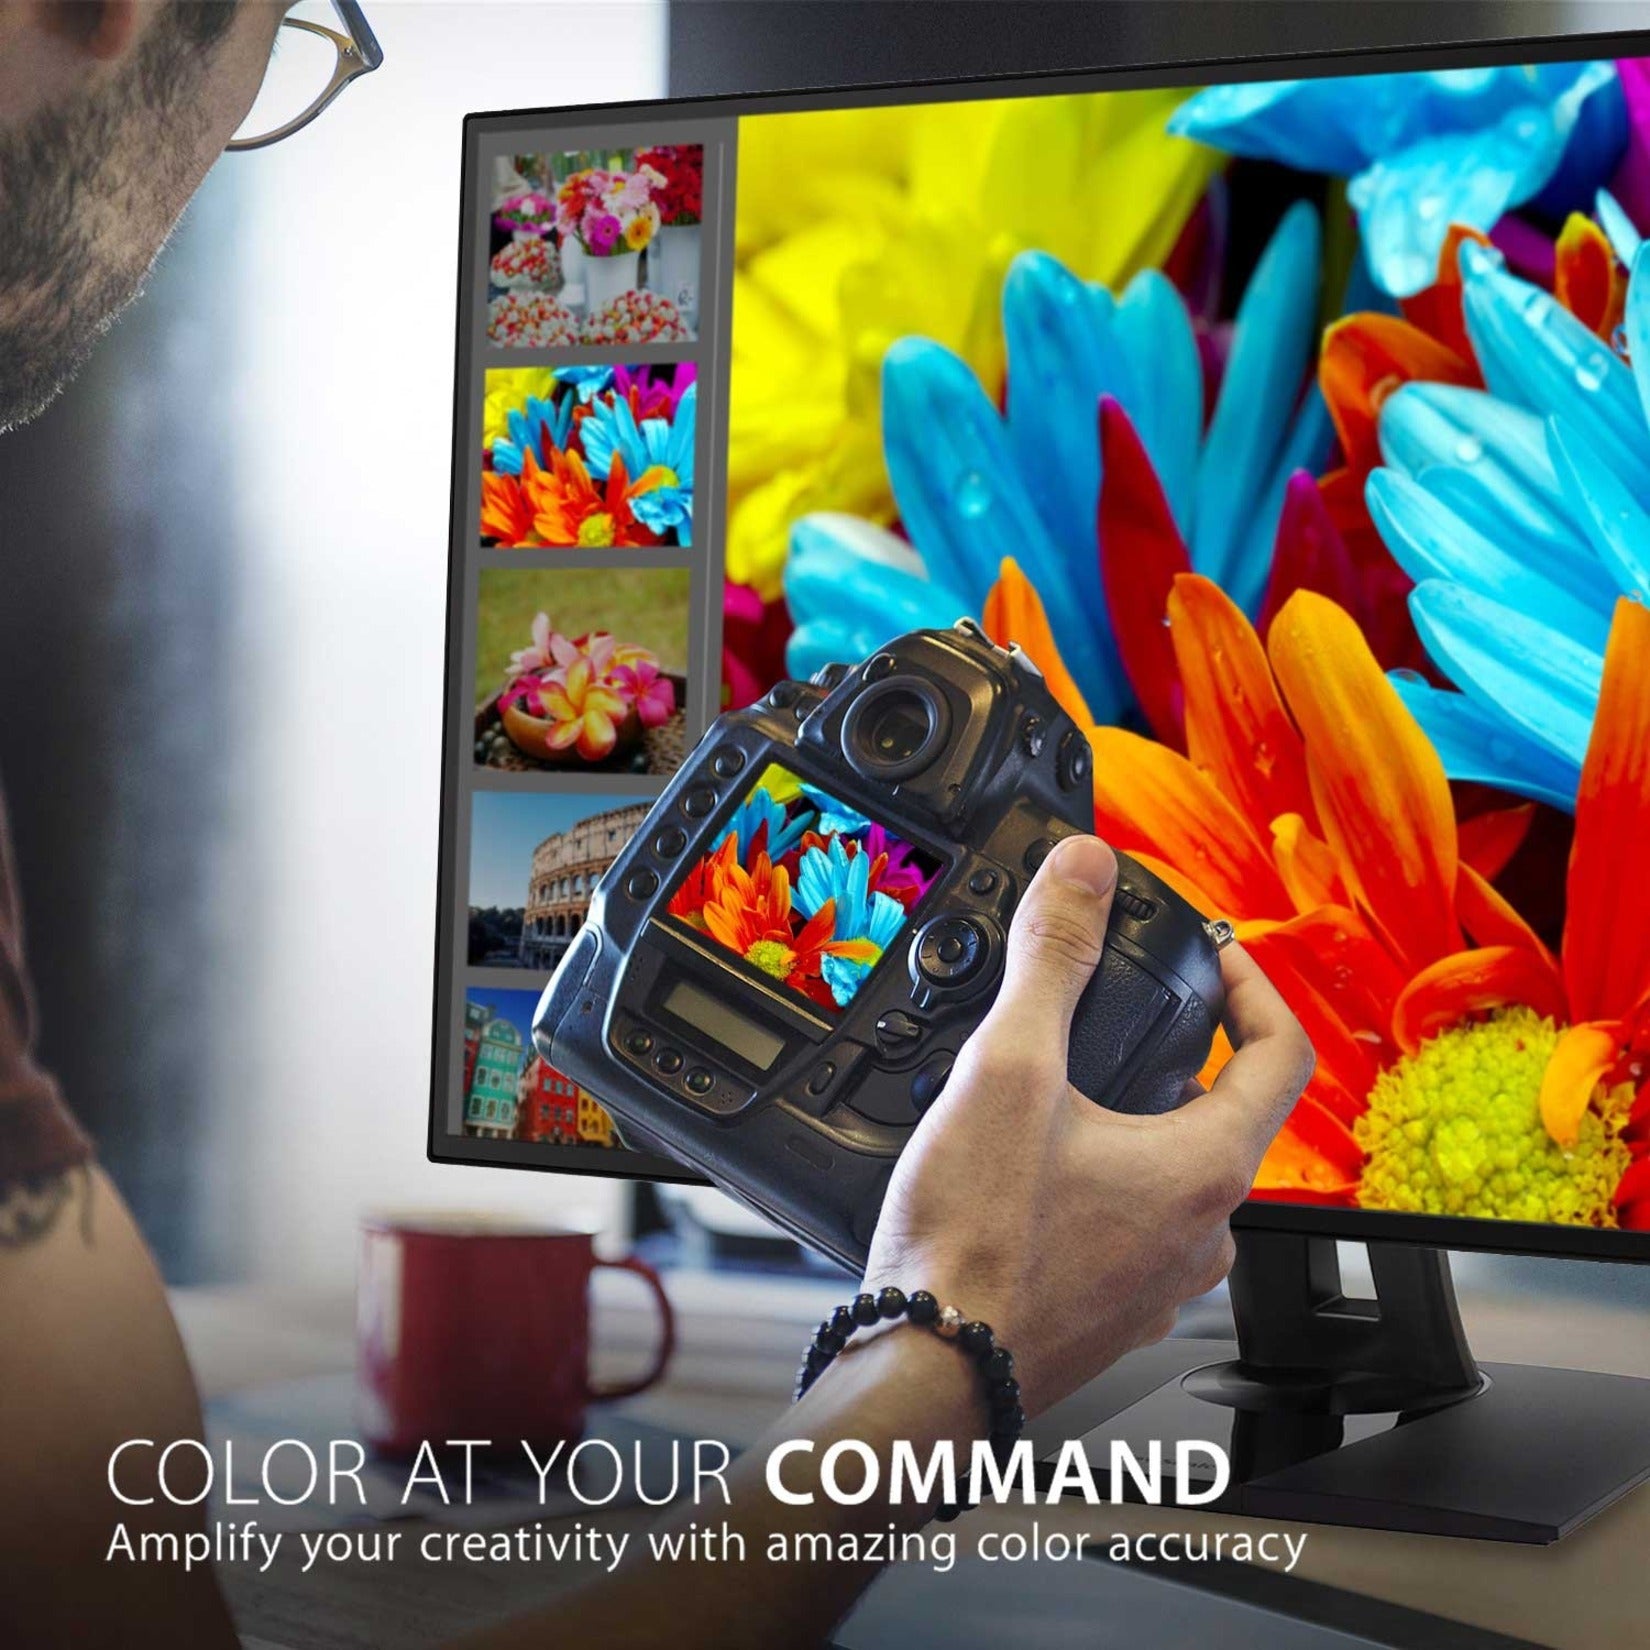 ViewSonic VP3268A-4K ColorPro Design Monitor, 32" 4K UHD, USB-C, 3840 x 2160 Resolution